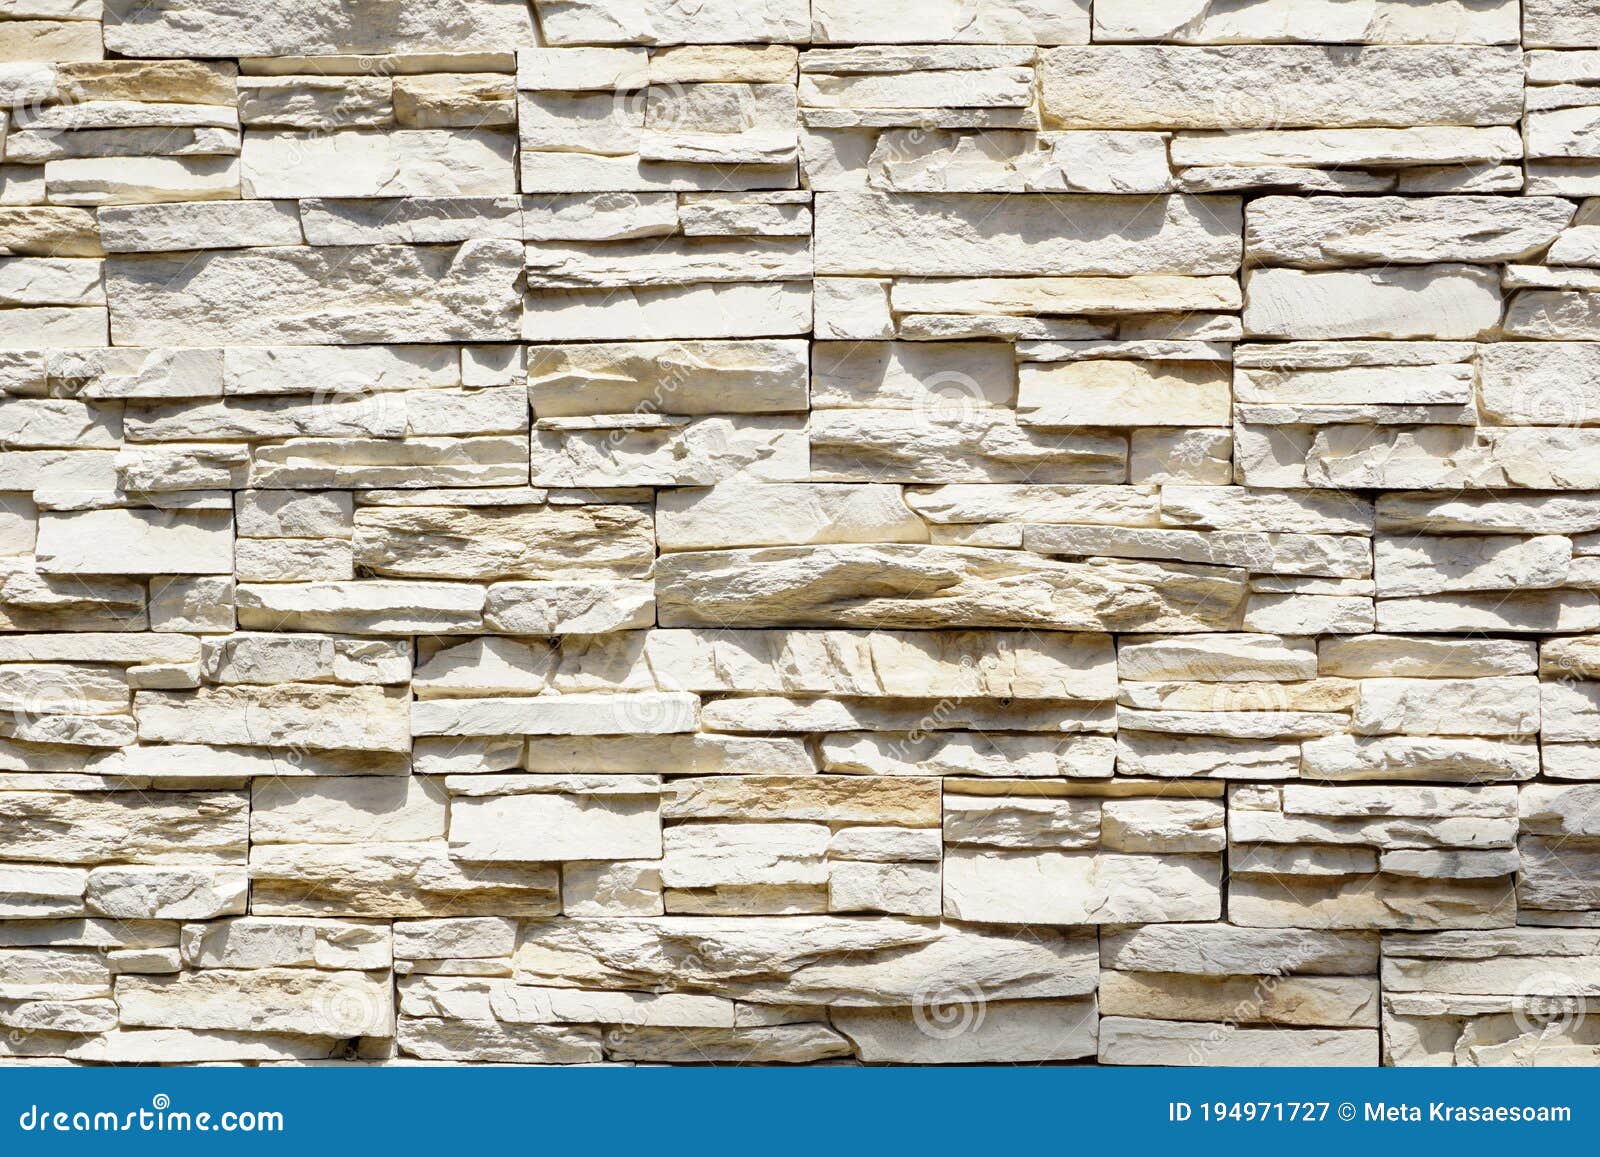 White Stacked Slabs Stone Wall Cladding Panels. Stock Image Image of granite, decorative